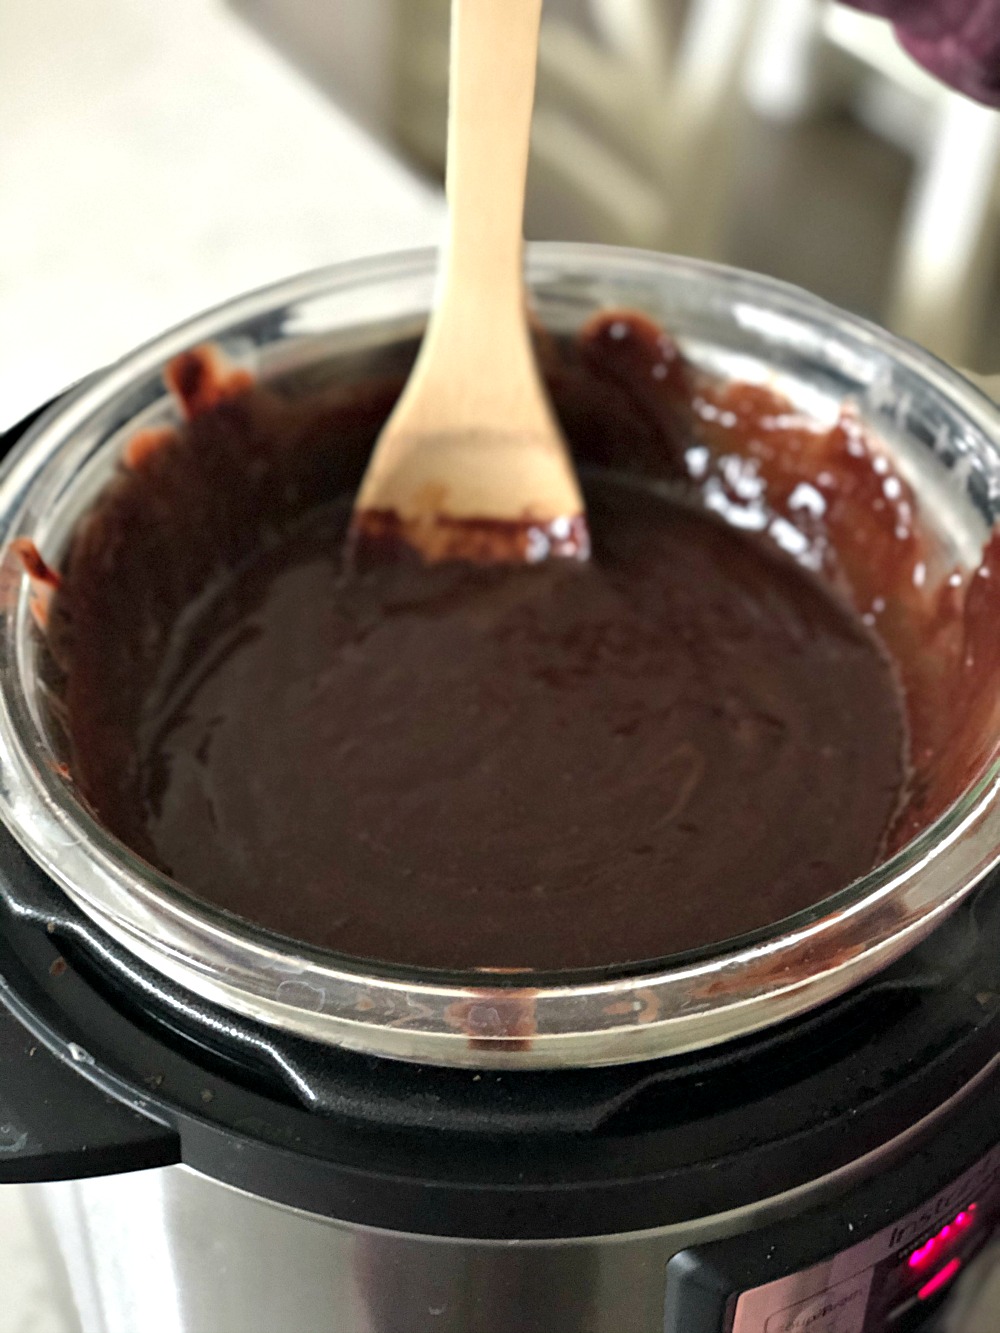 Wooden spoon stirring chocolate mixture un glass bowl